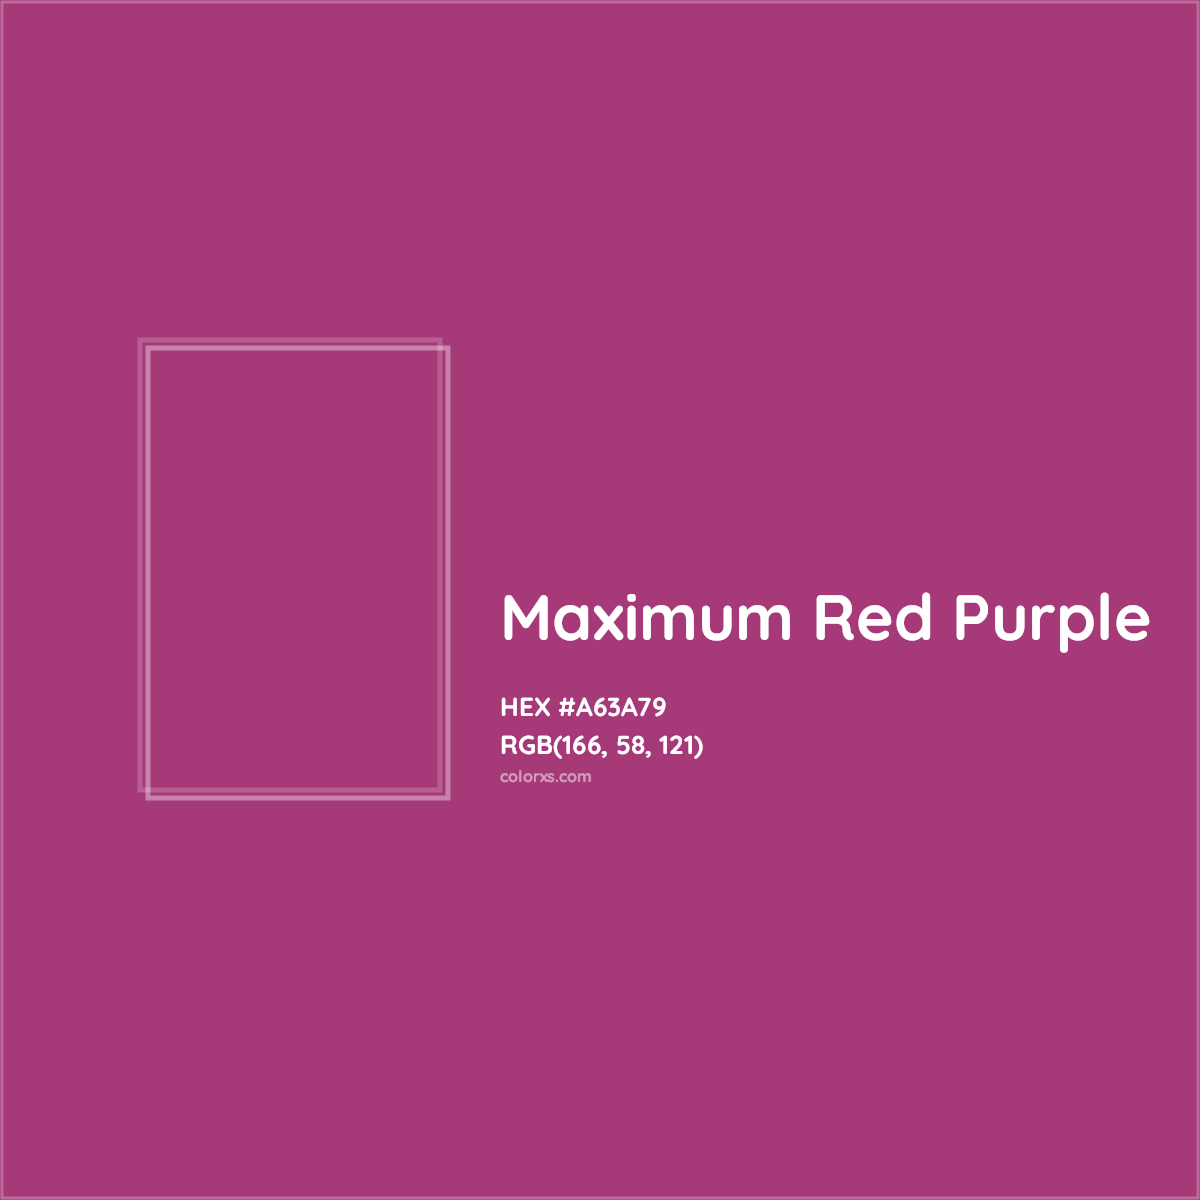 HEX #A63A79 Maximum Red Purple Color Crayola Crayons - Color Code